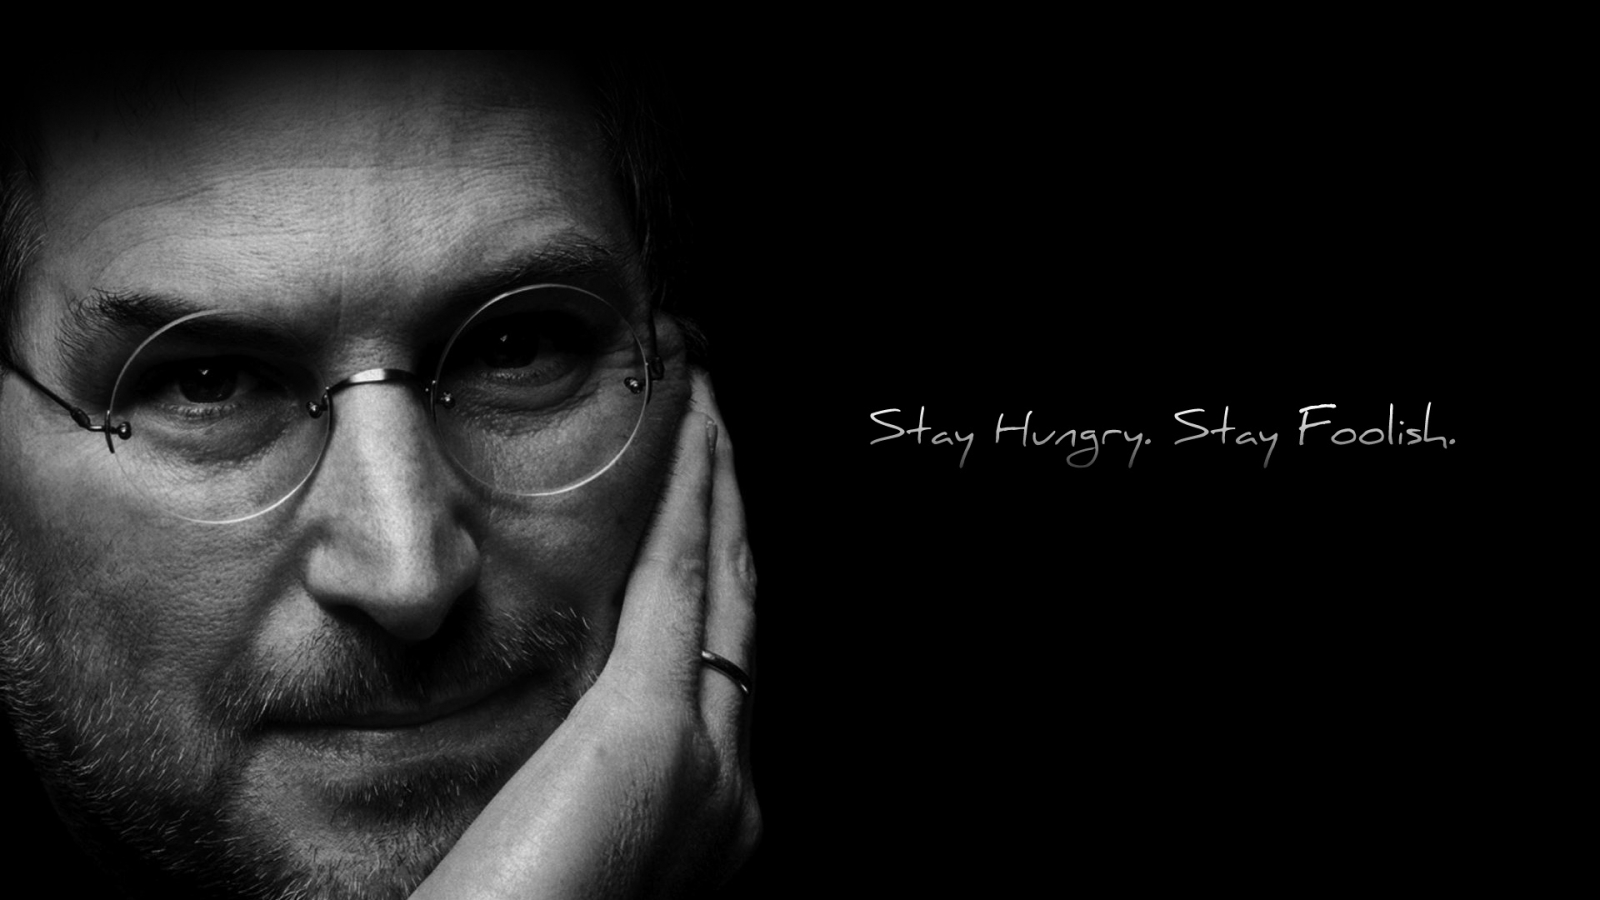 Steve Jobs Quote for 1600 x 900 HDTV resolution